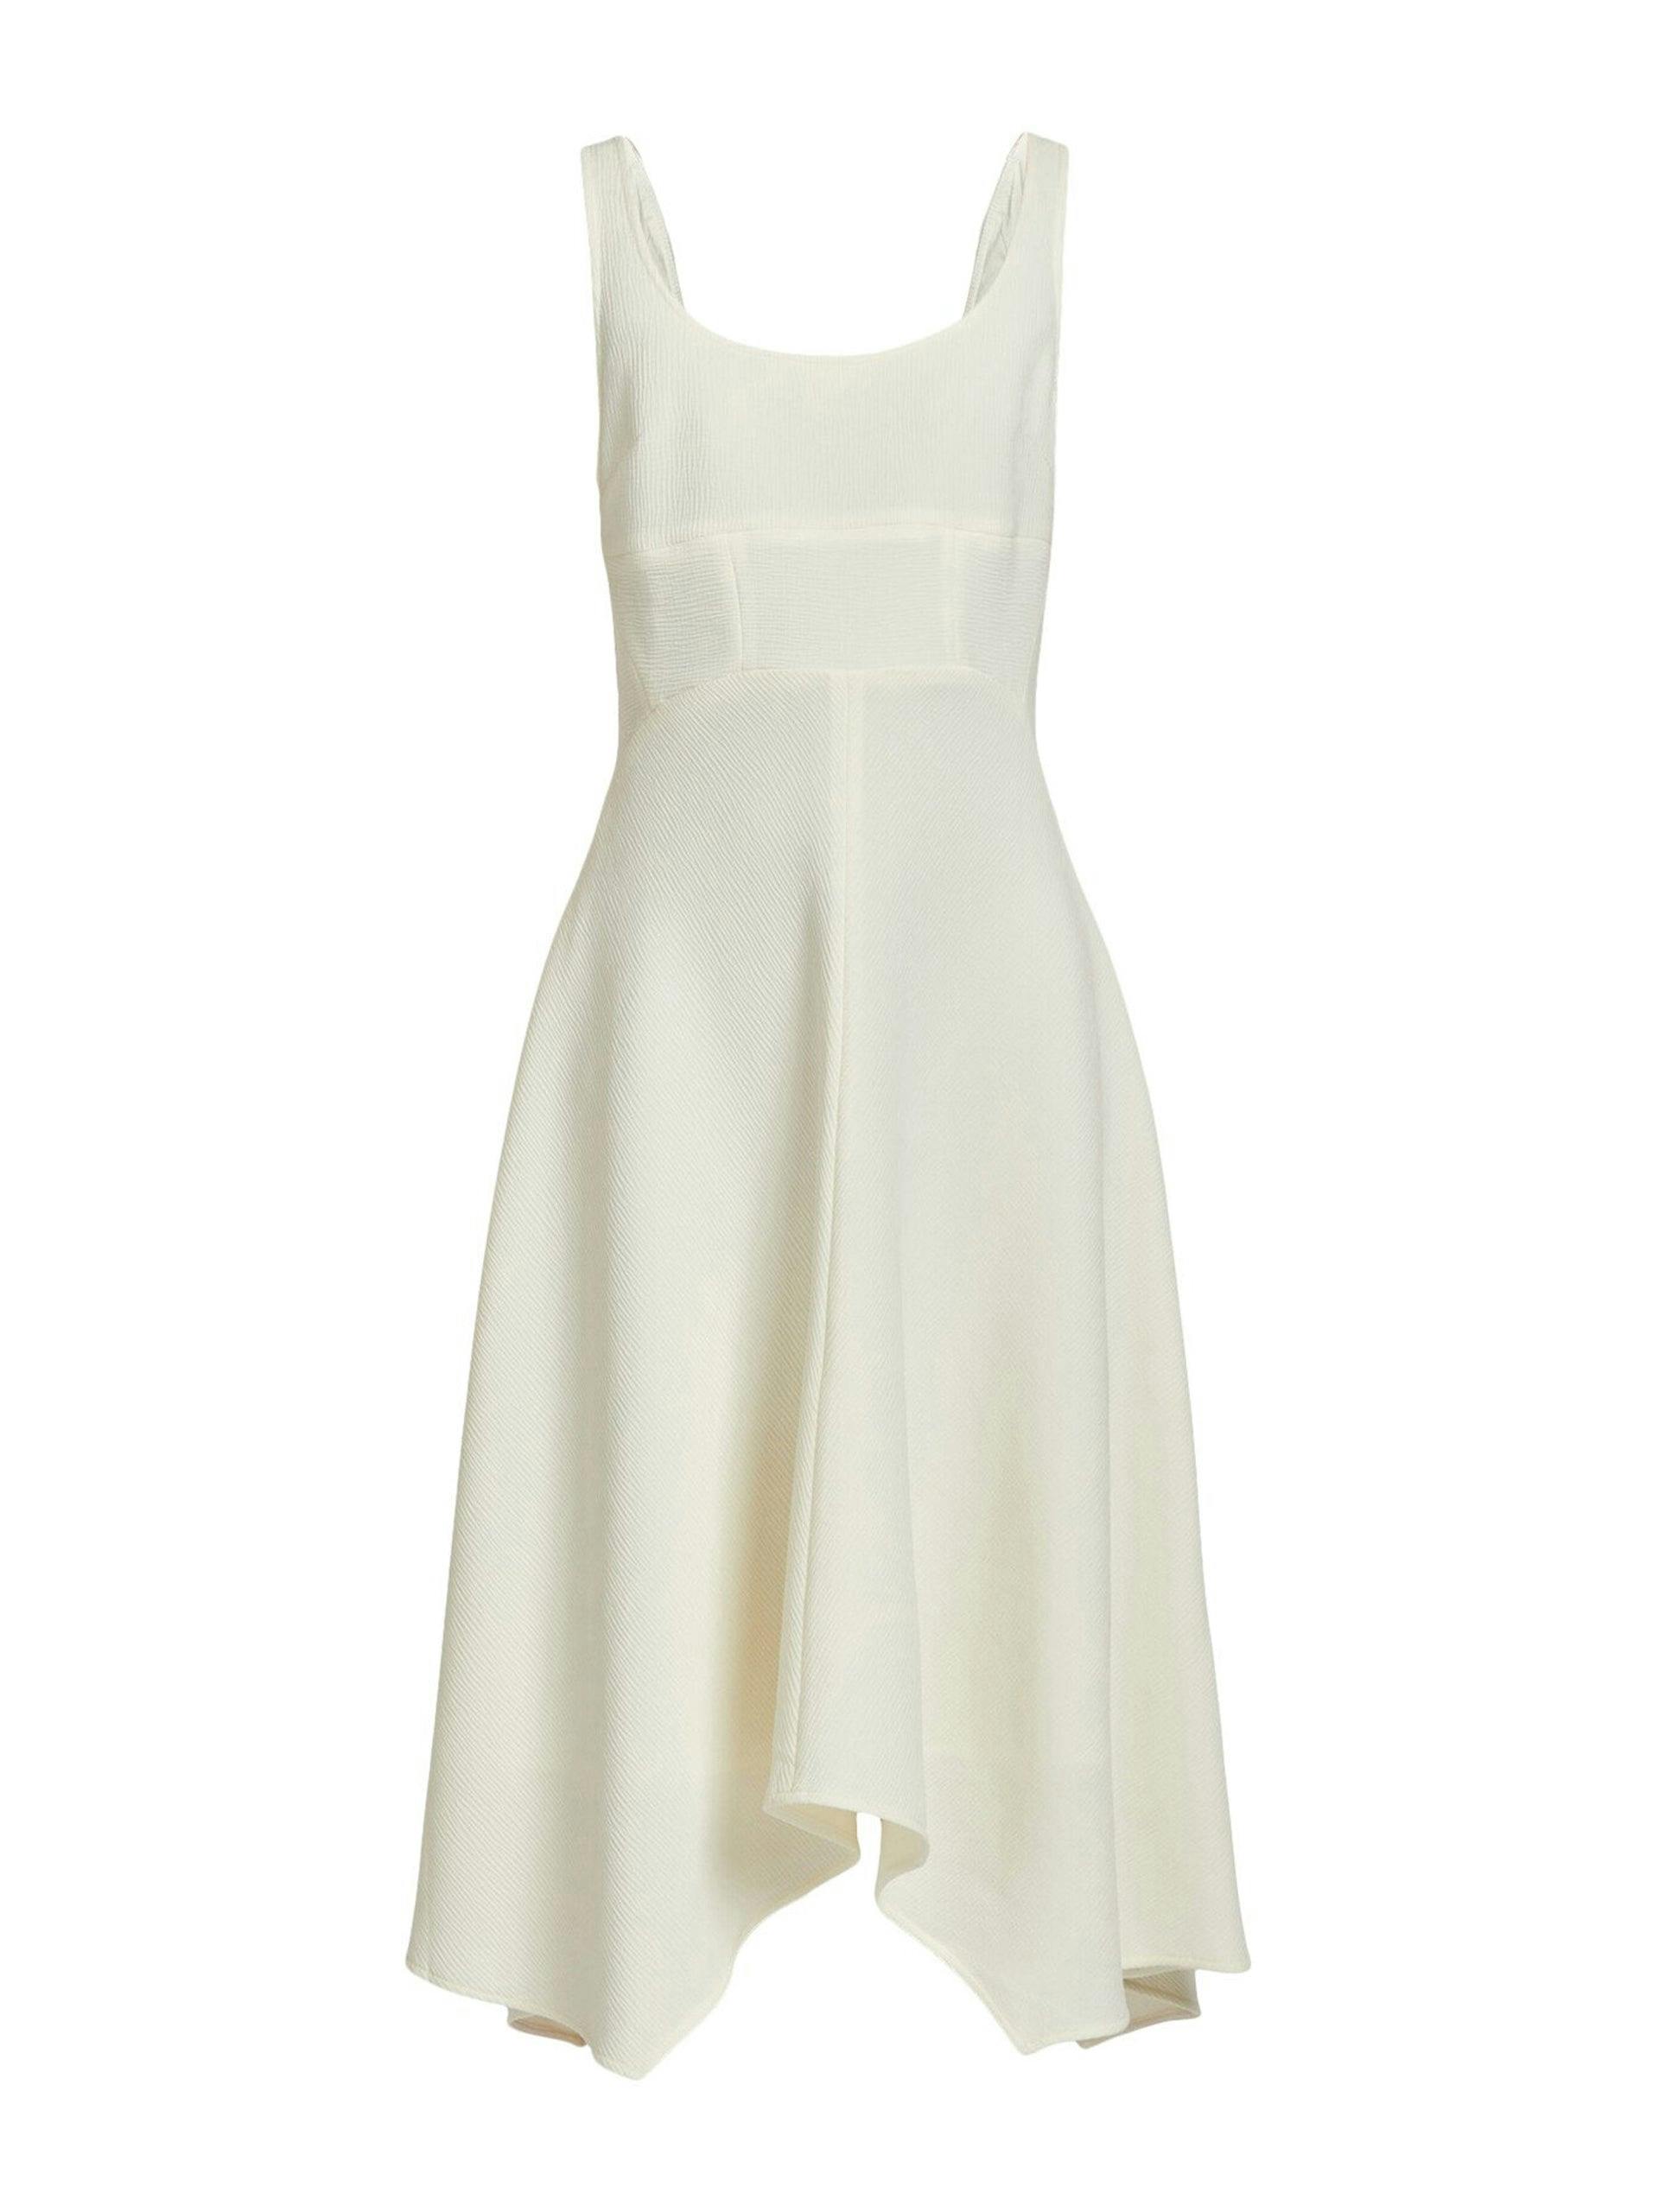 Bustier dress in off-white